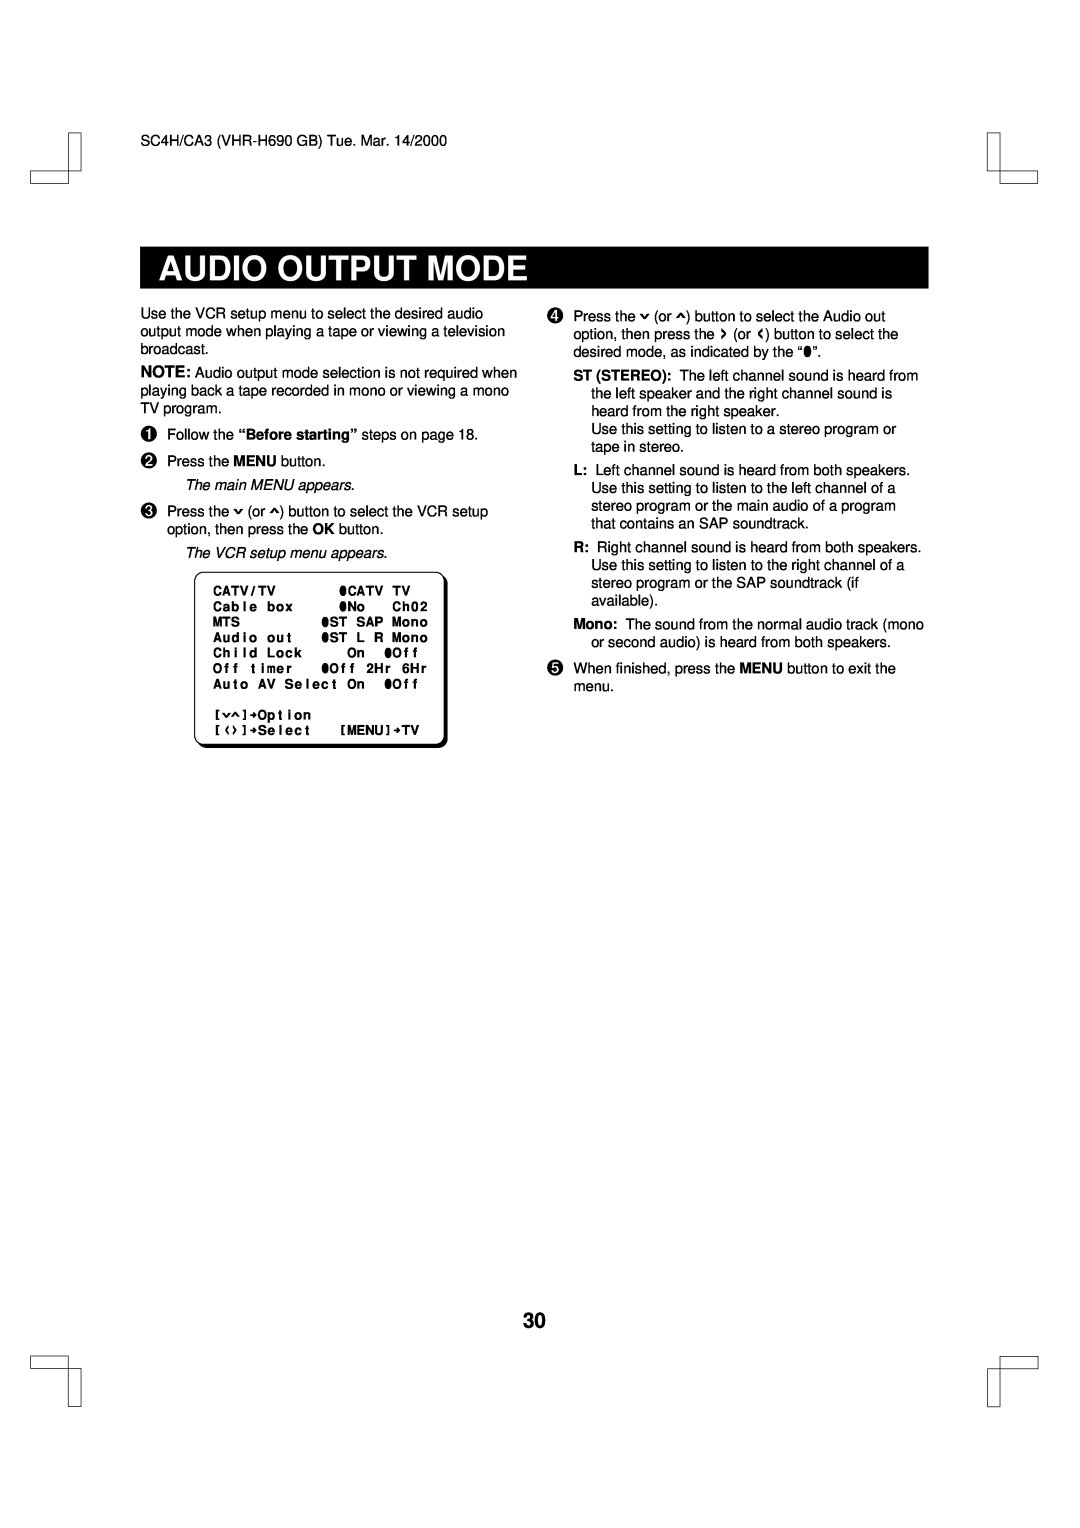 Sanyo VHR-H690 instruction manual Audio Output Mode, The VCR setup menu appears 